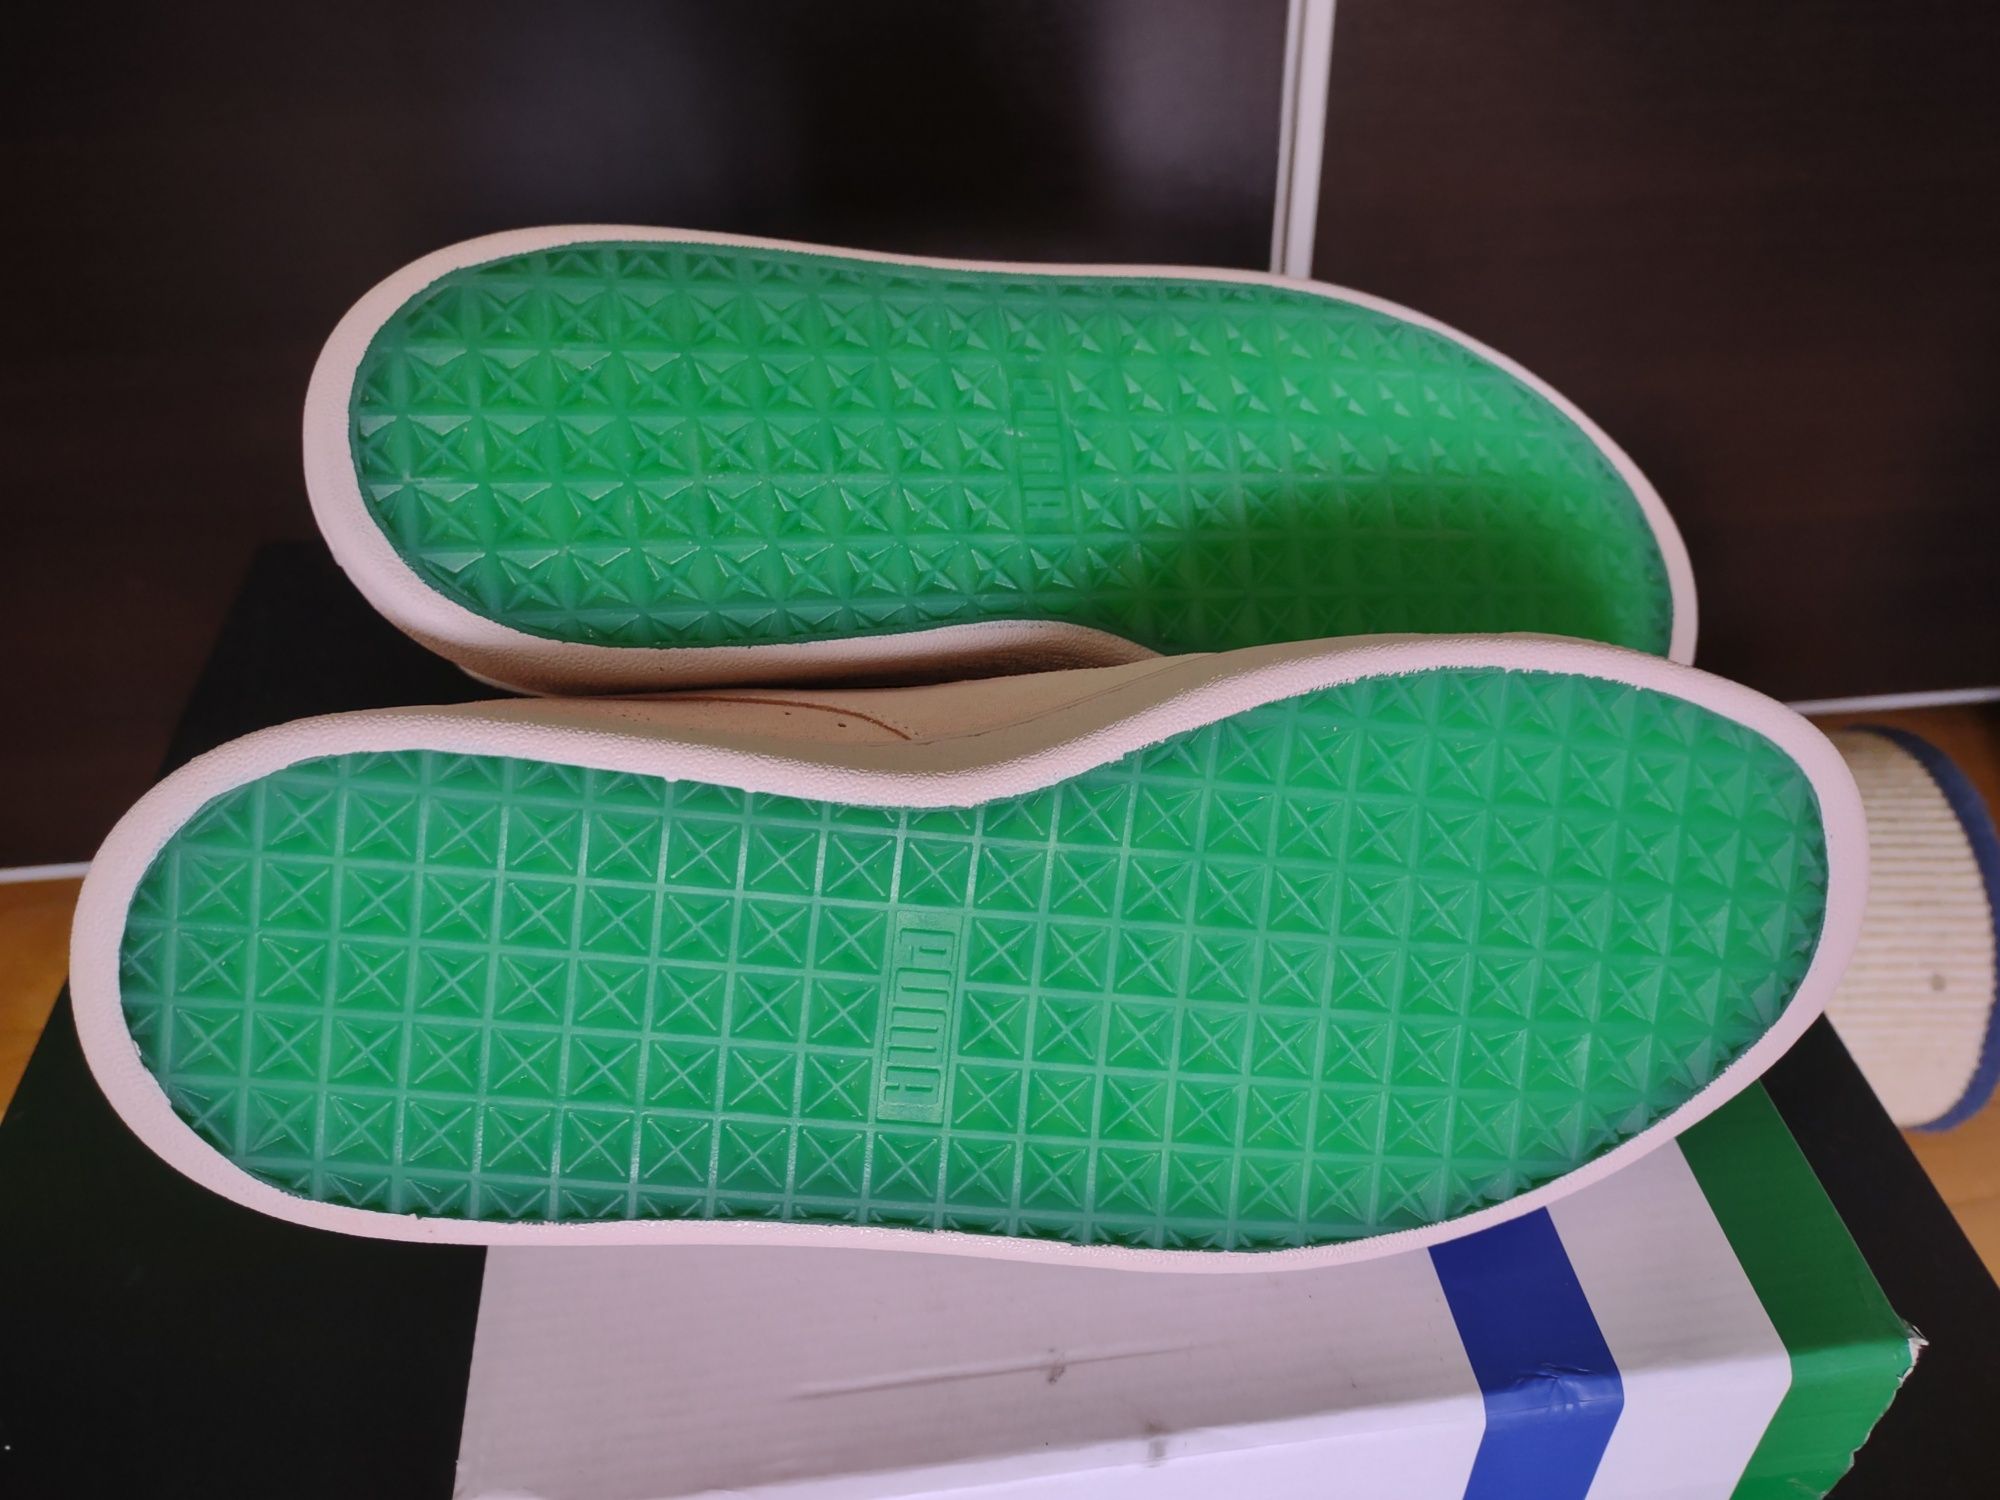 Vand adidasi PumaxBig Sean 44,5 nu Nike Air